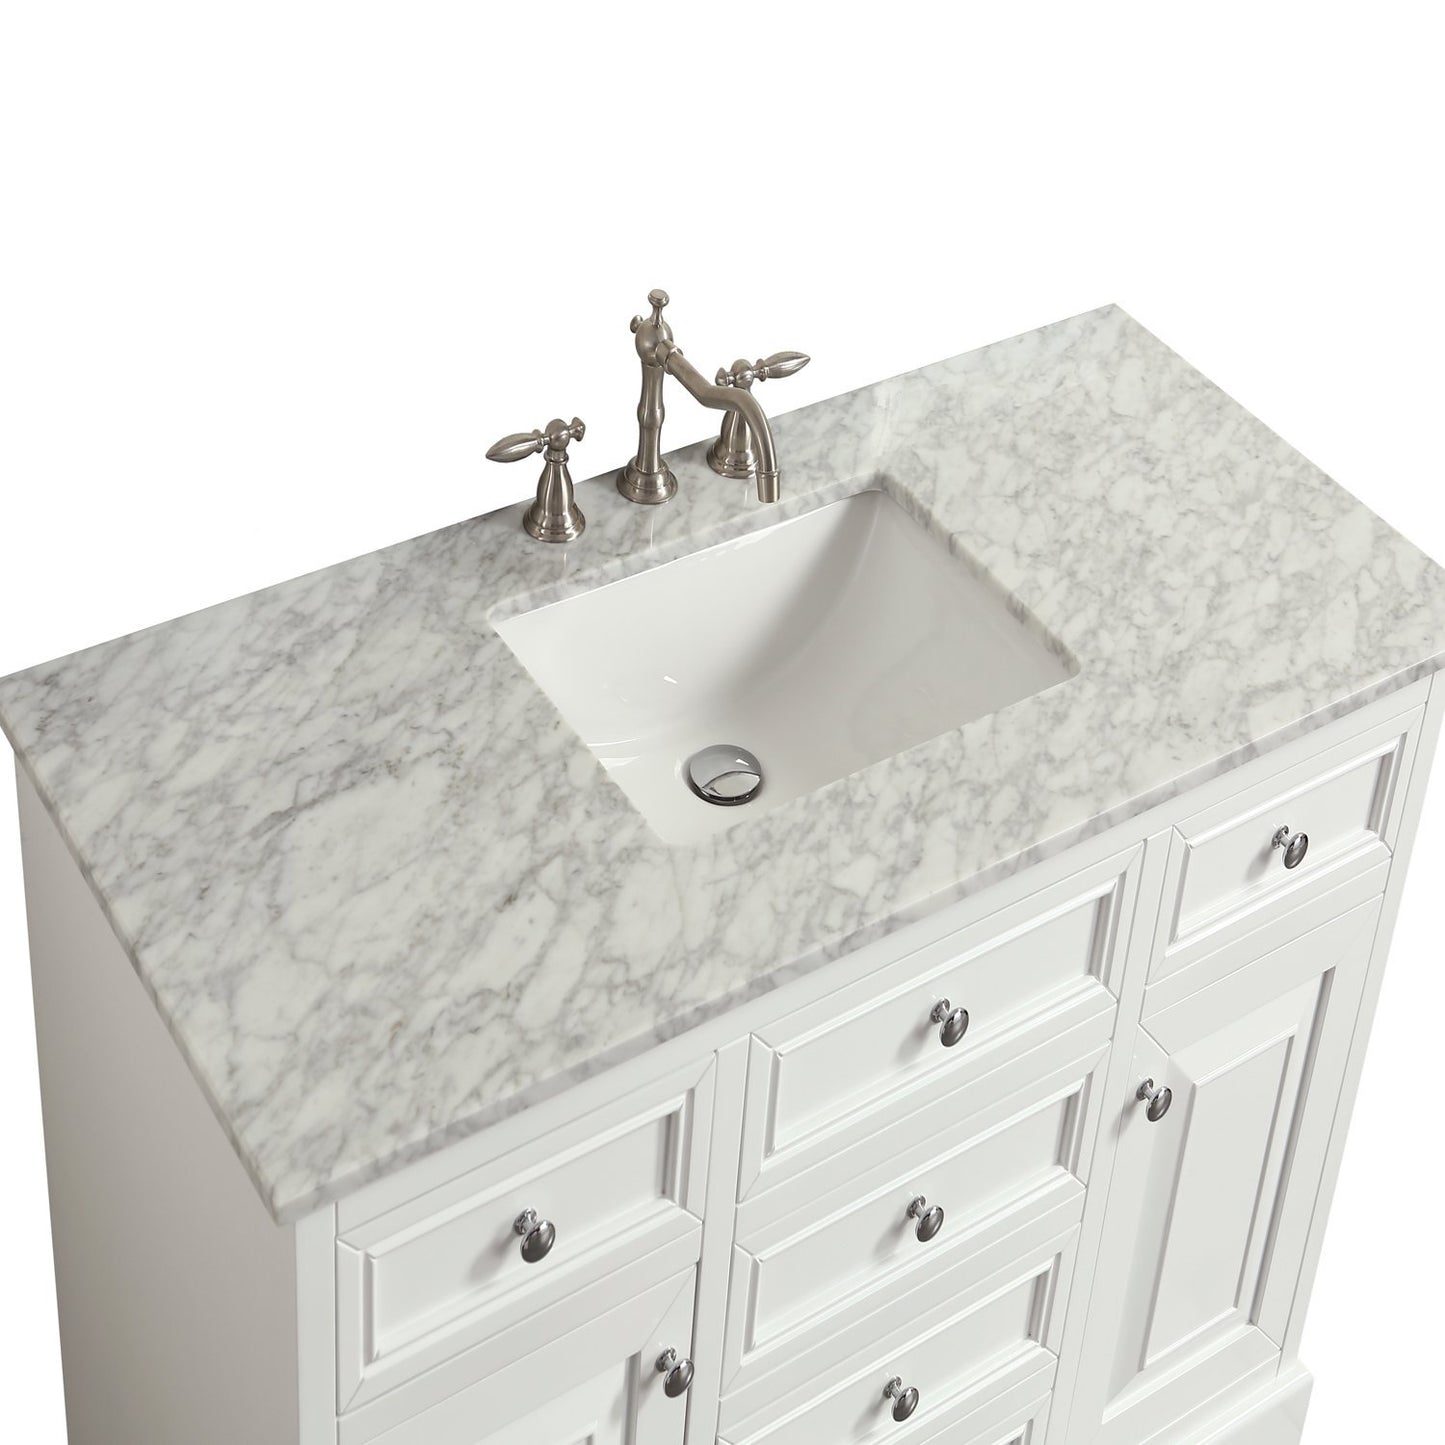 Eviva Monroe 48 in Bathroom Vanity  with White Carrara Marble Top and White Undermount Porcelain Sink - Luxe Bathroom Vanities Luxury Bathroom Fixtures Bathroom Furniture